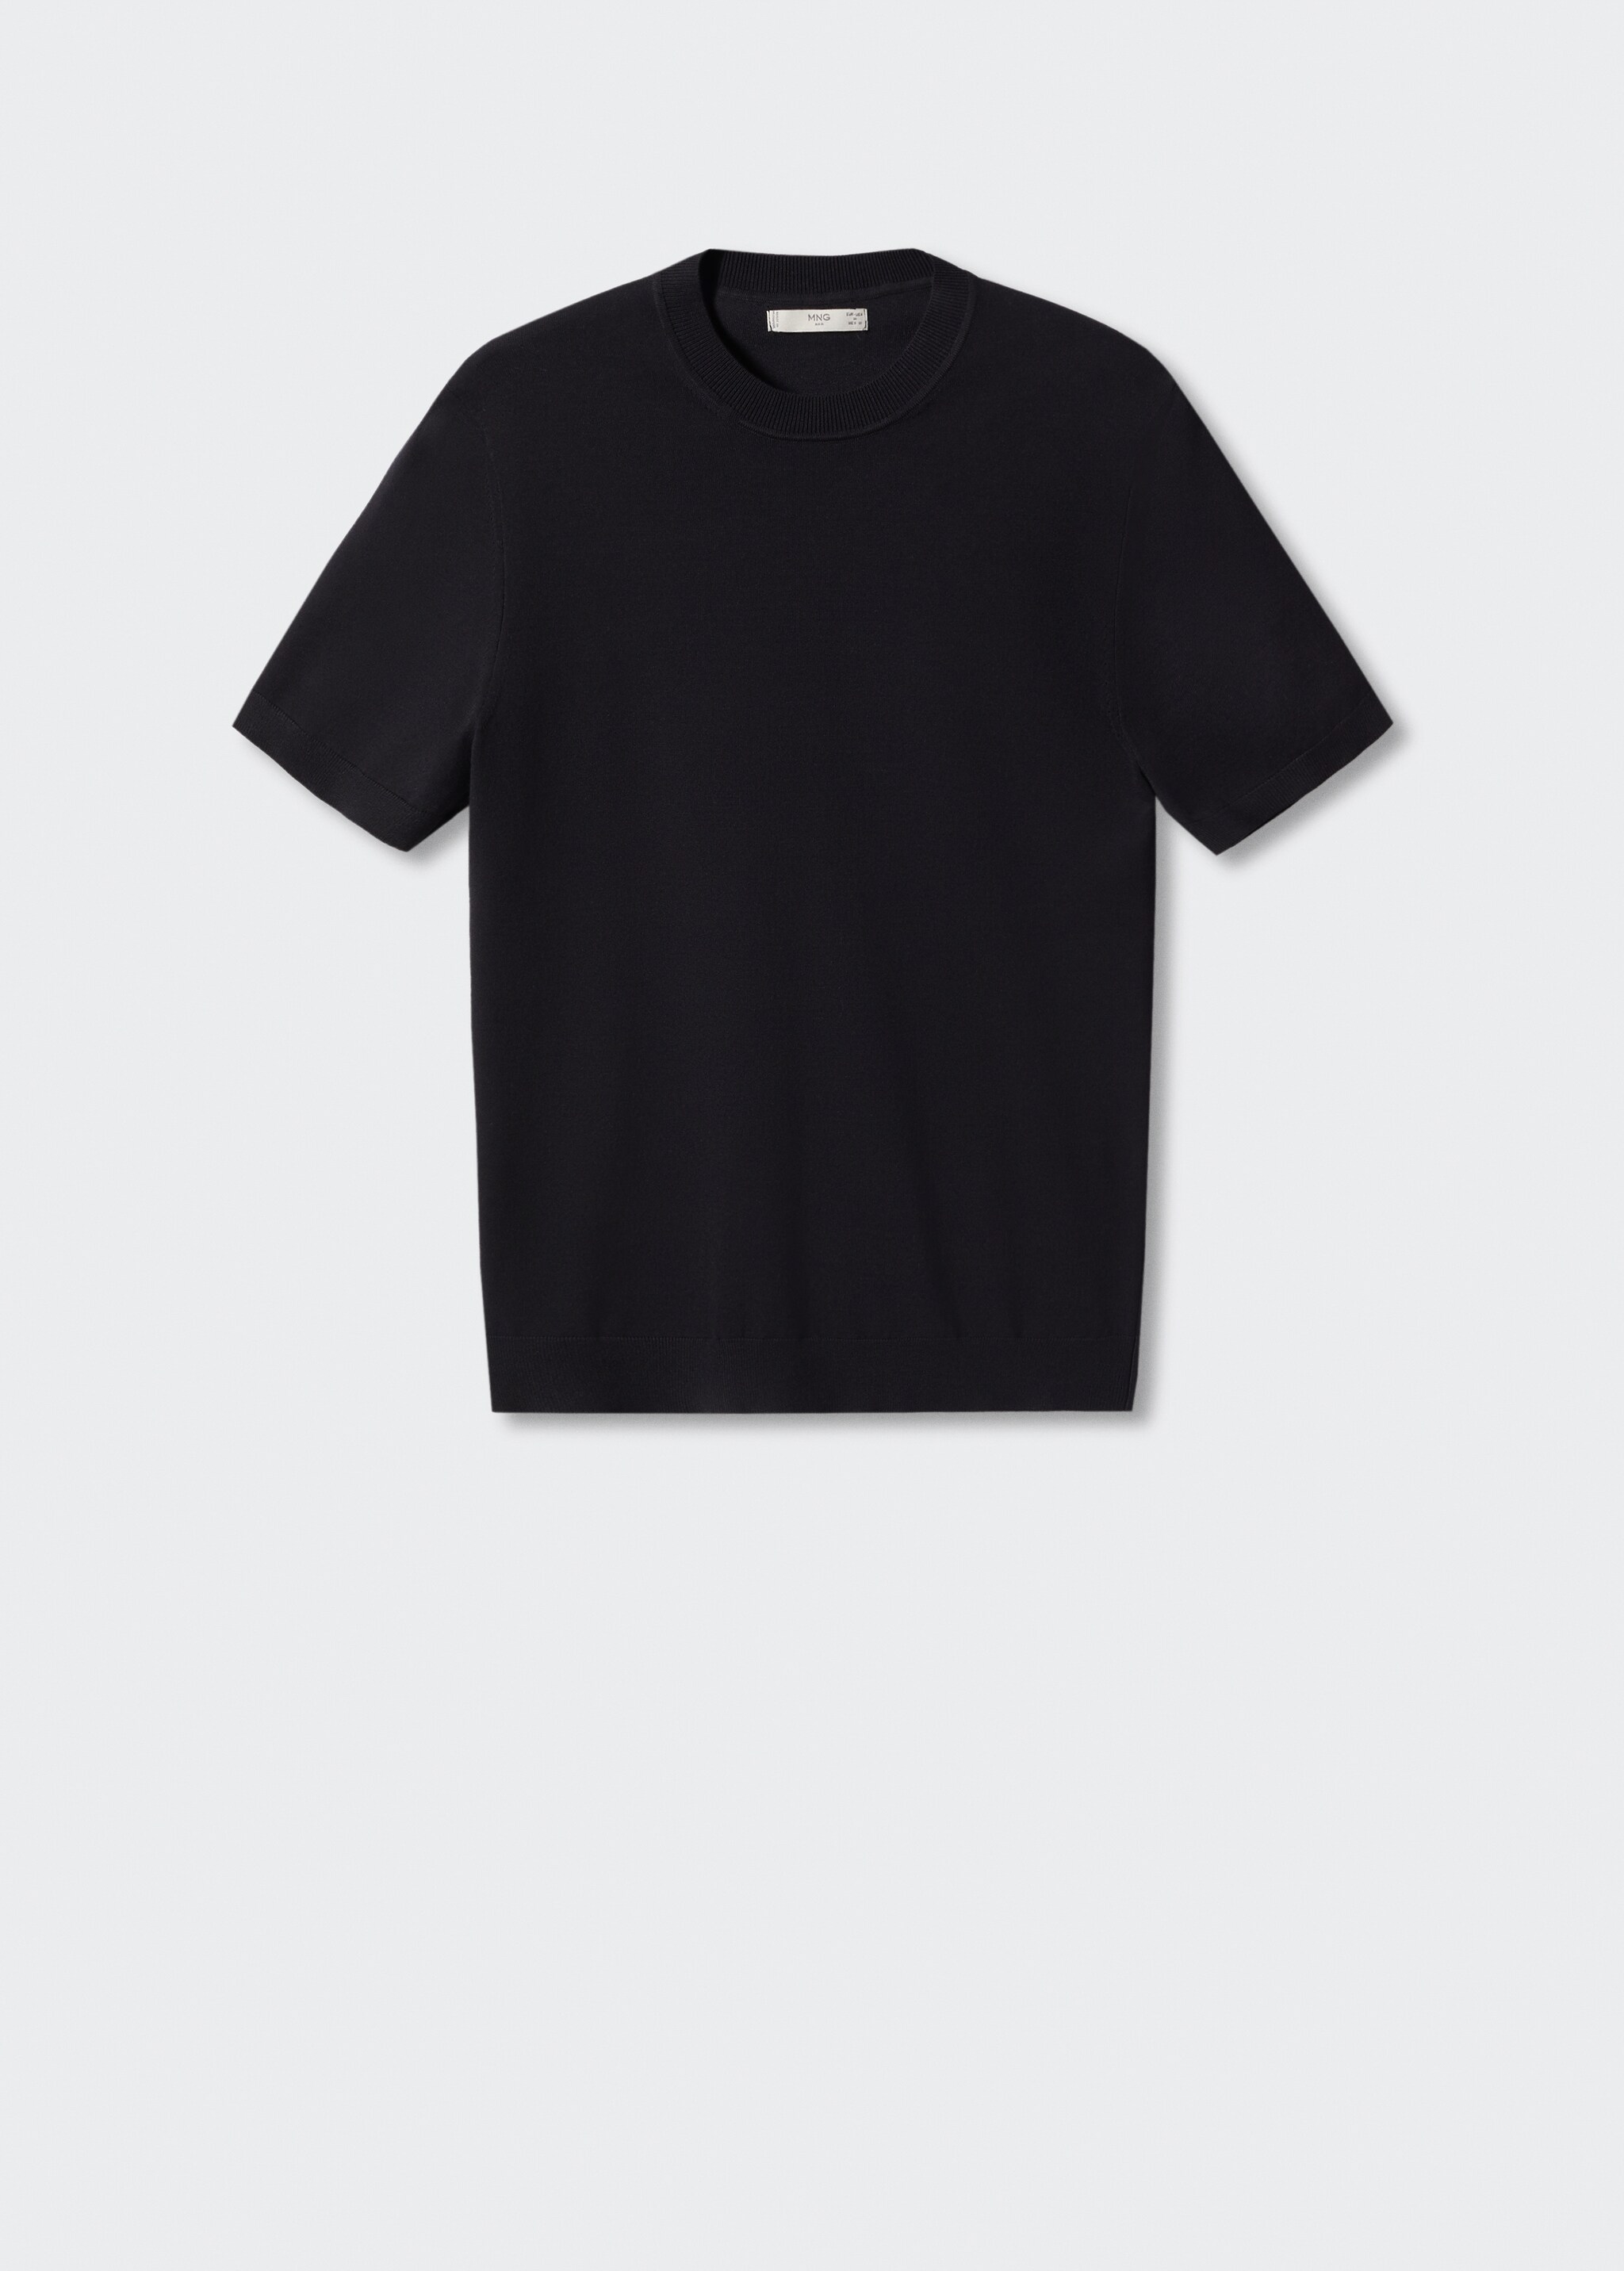 Camiseta punto fino - Artículo sin modelo